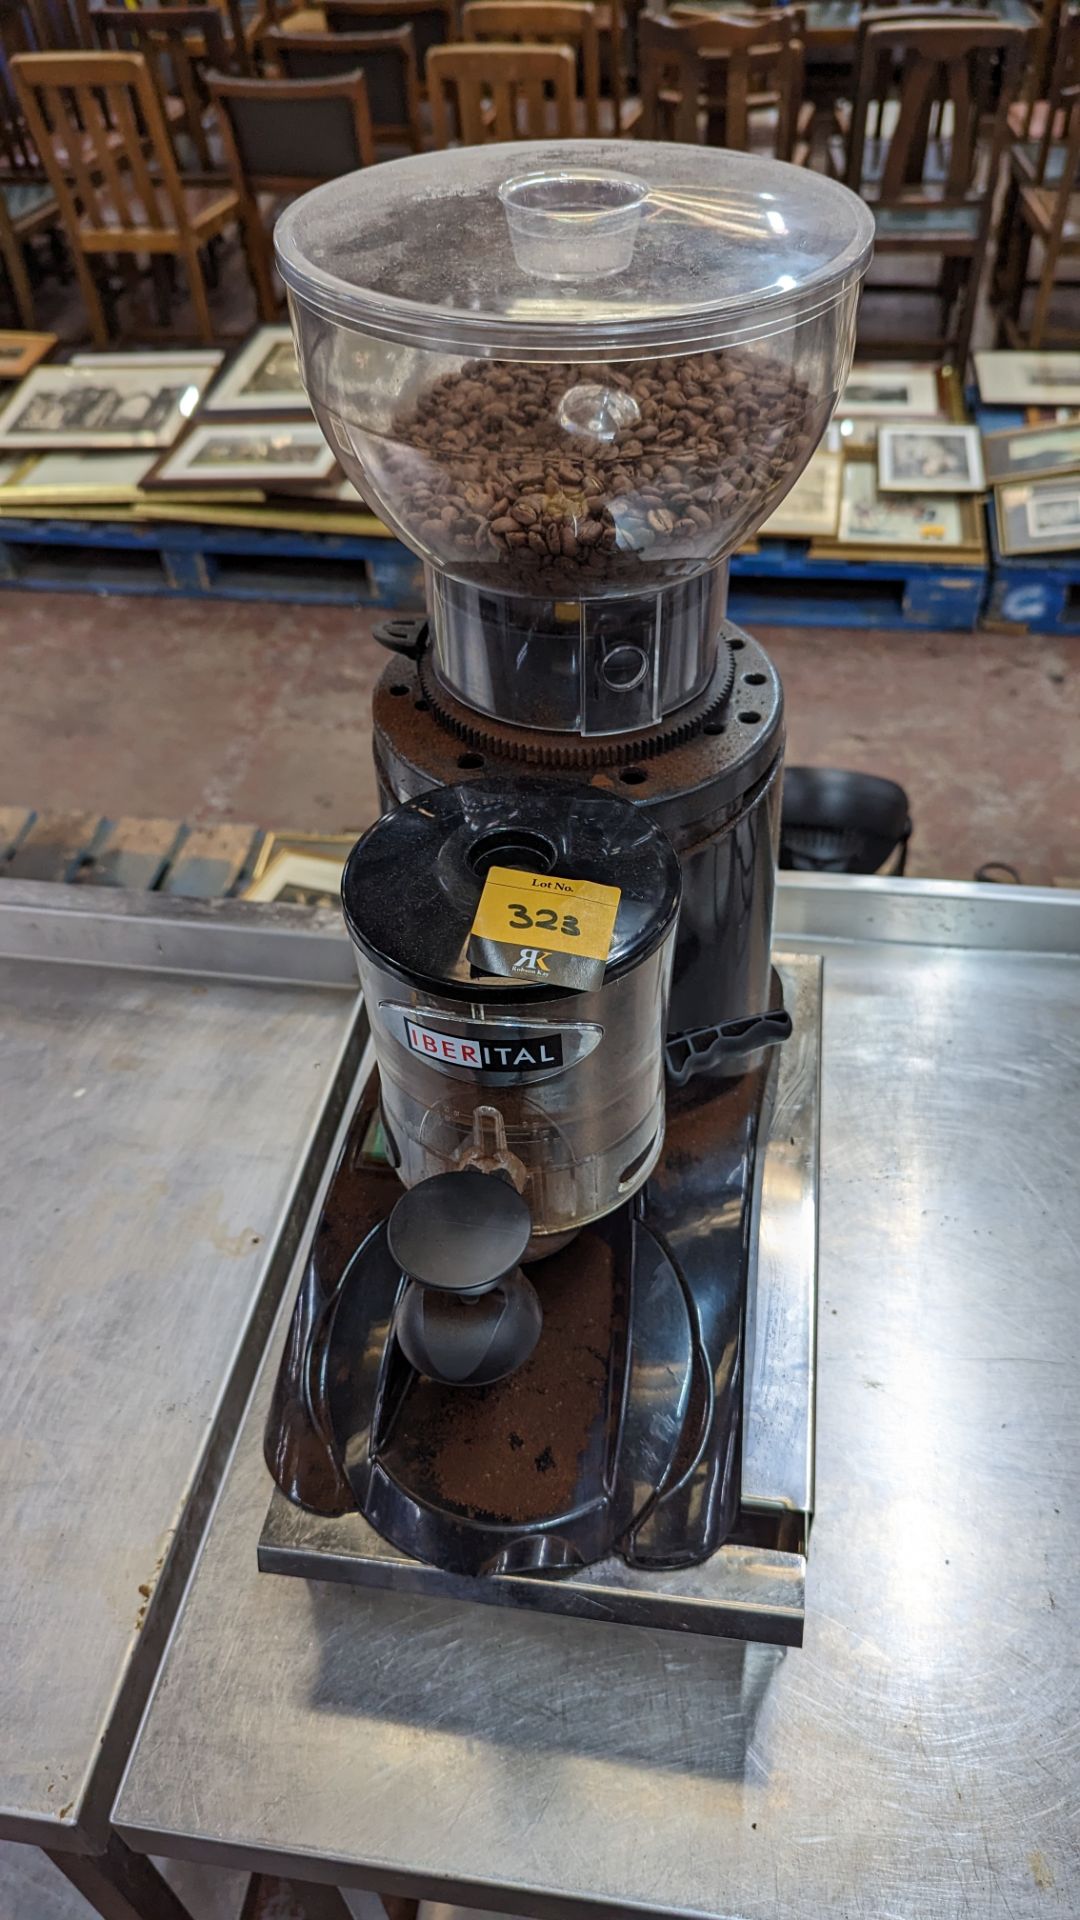 Iberital large coffee grinder plus stainless steel knock box/drawer - Image 10 of 10